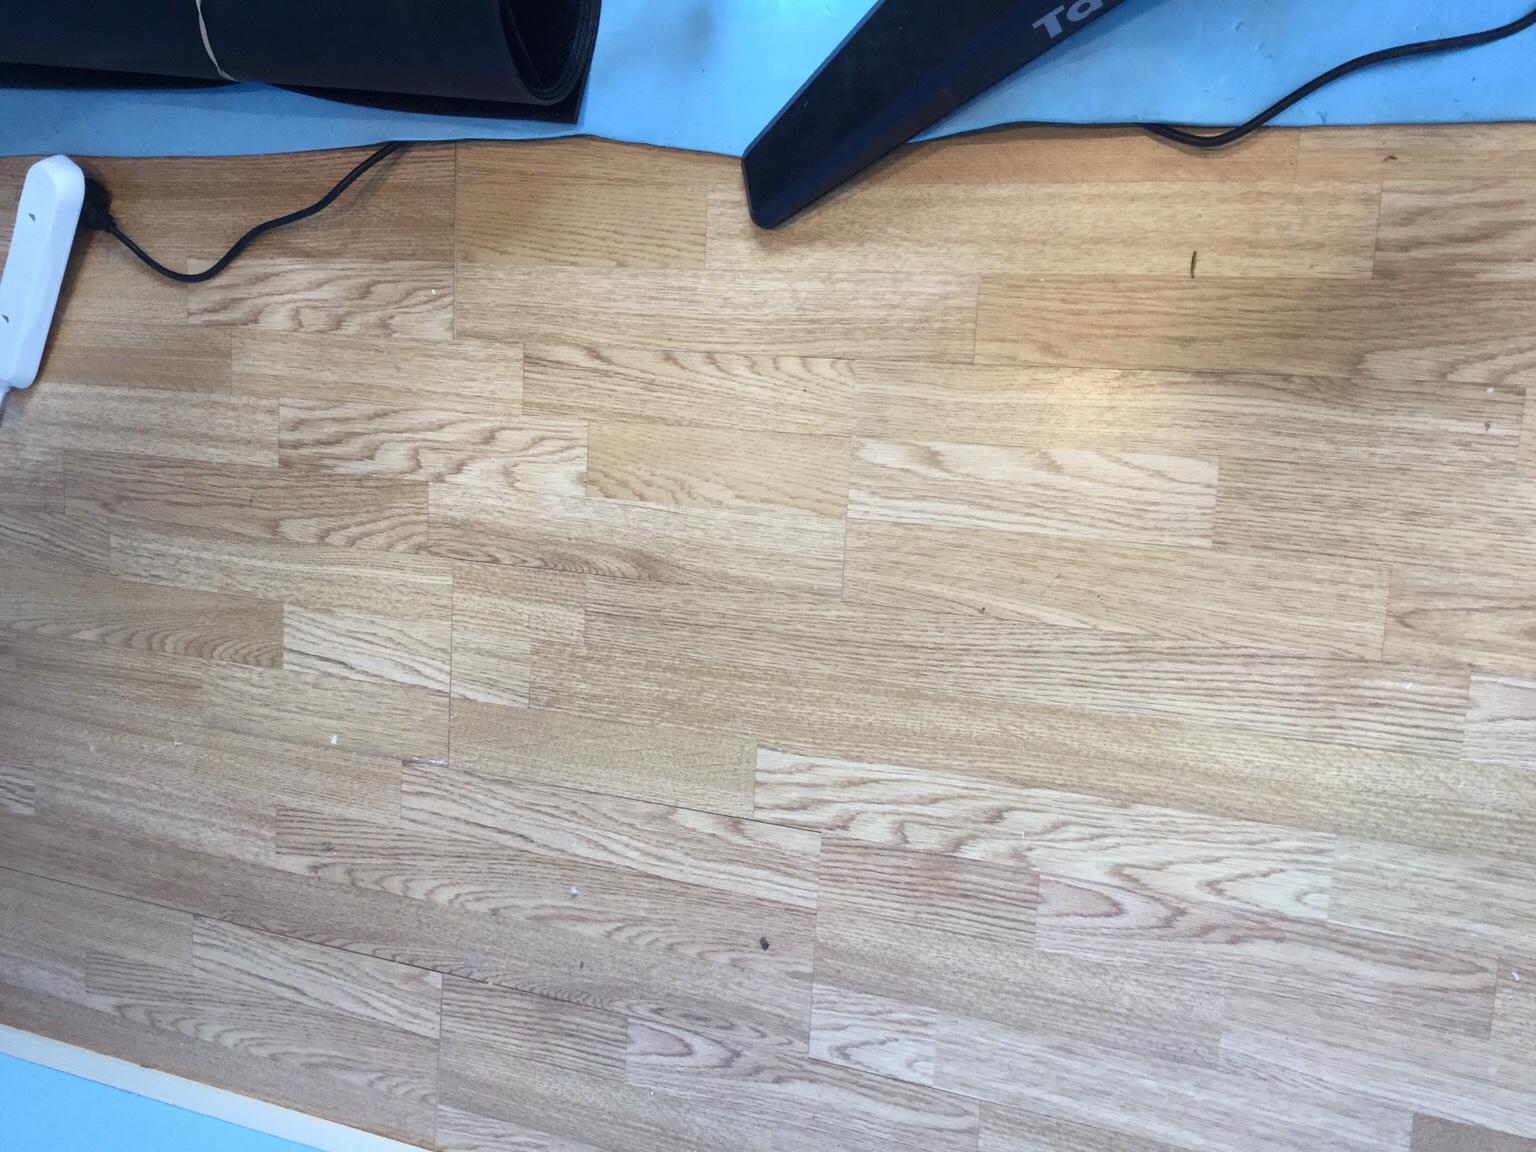 55 Light Oak Laminate Flooring Boards In Tn26 Ashford Fur 40 00